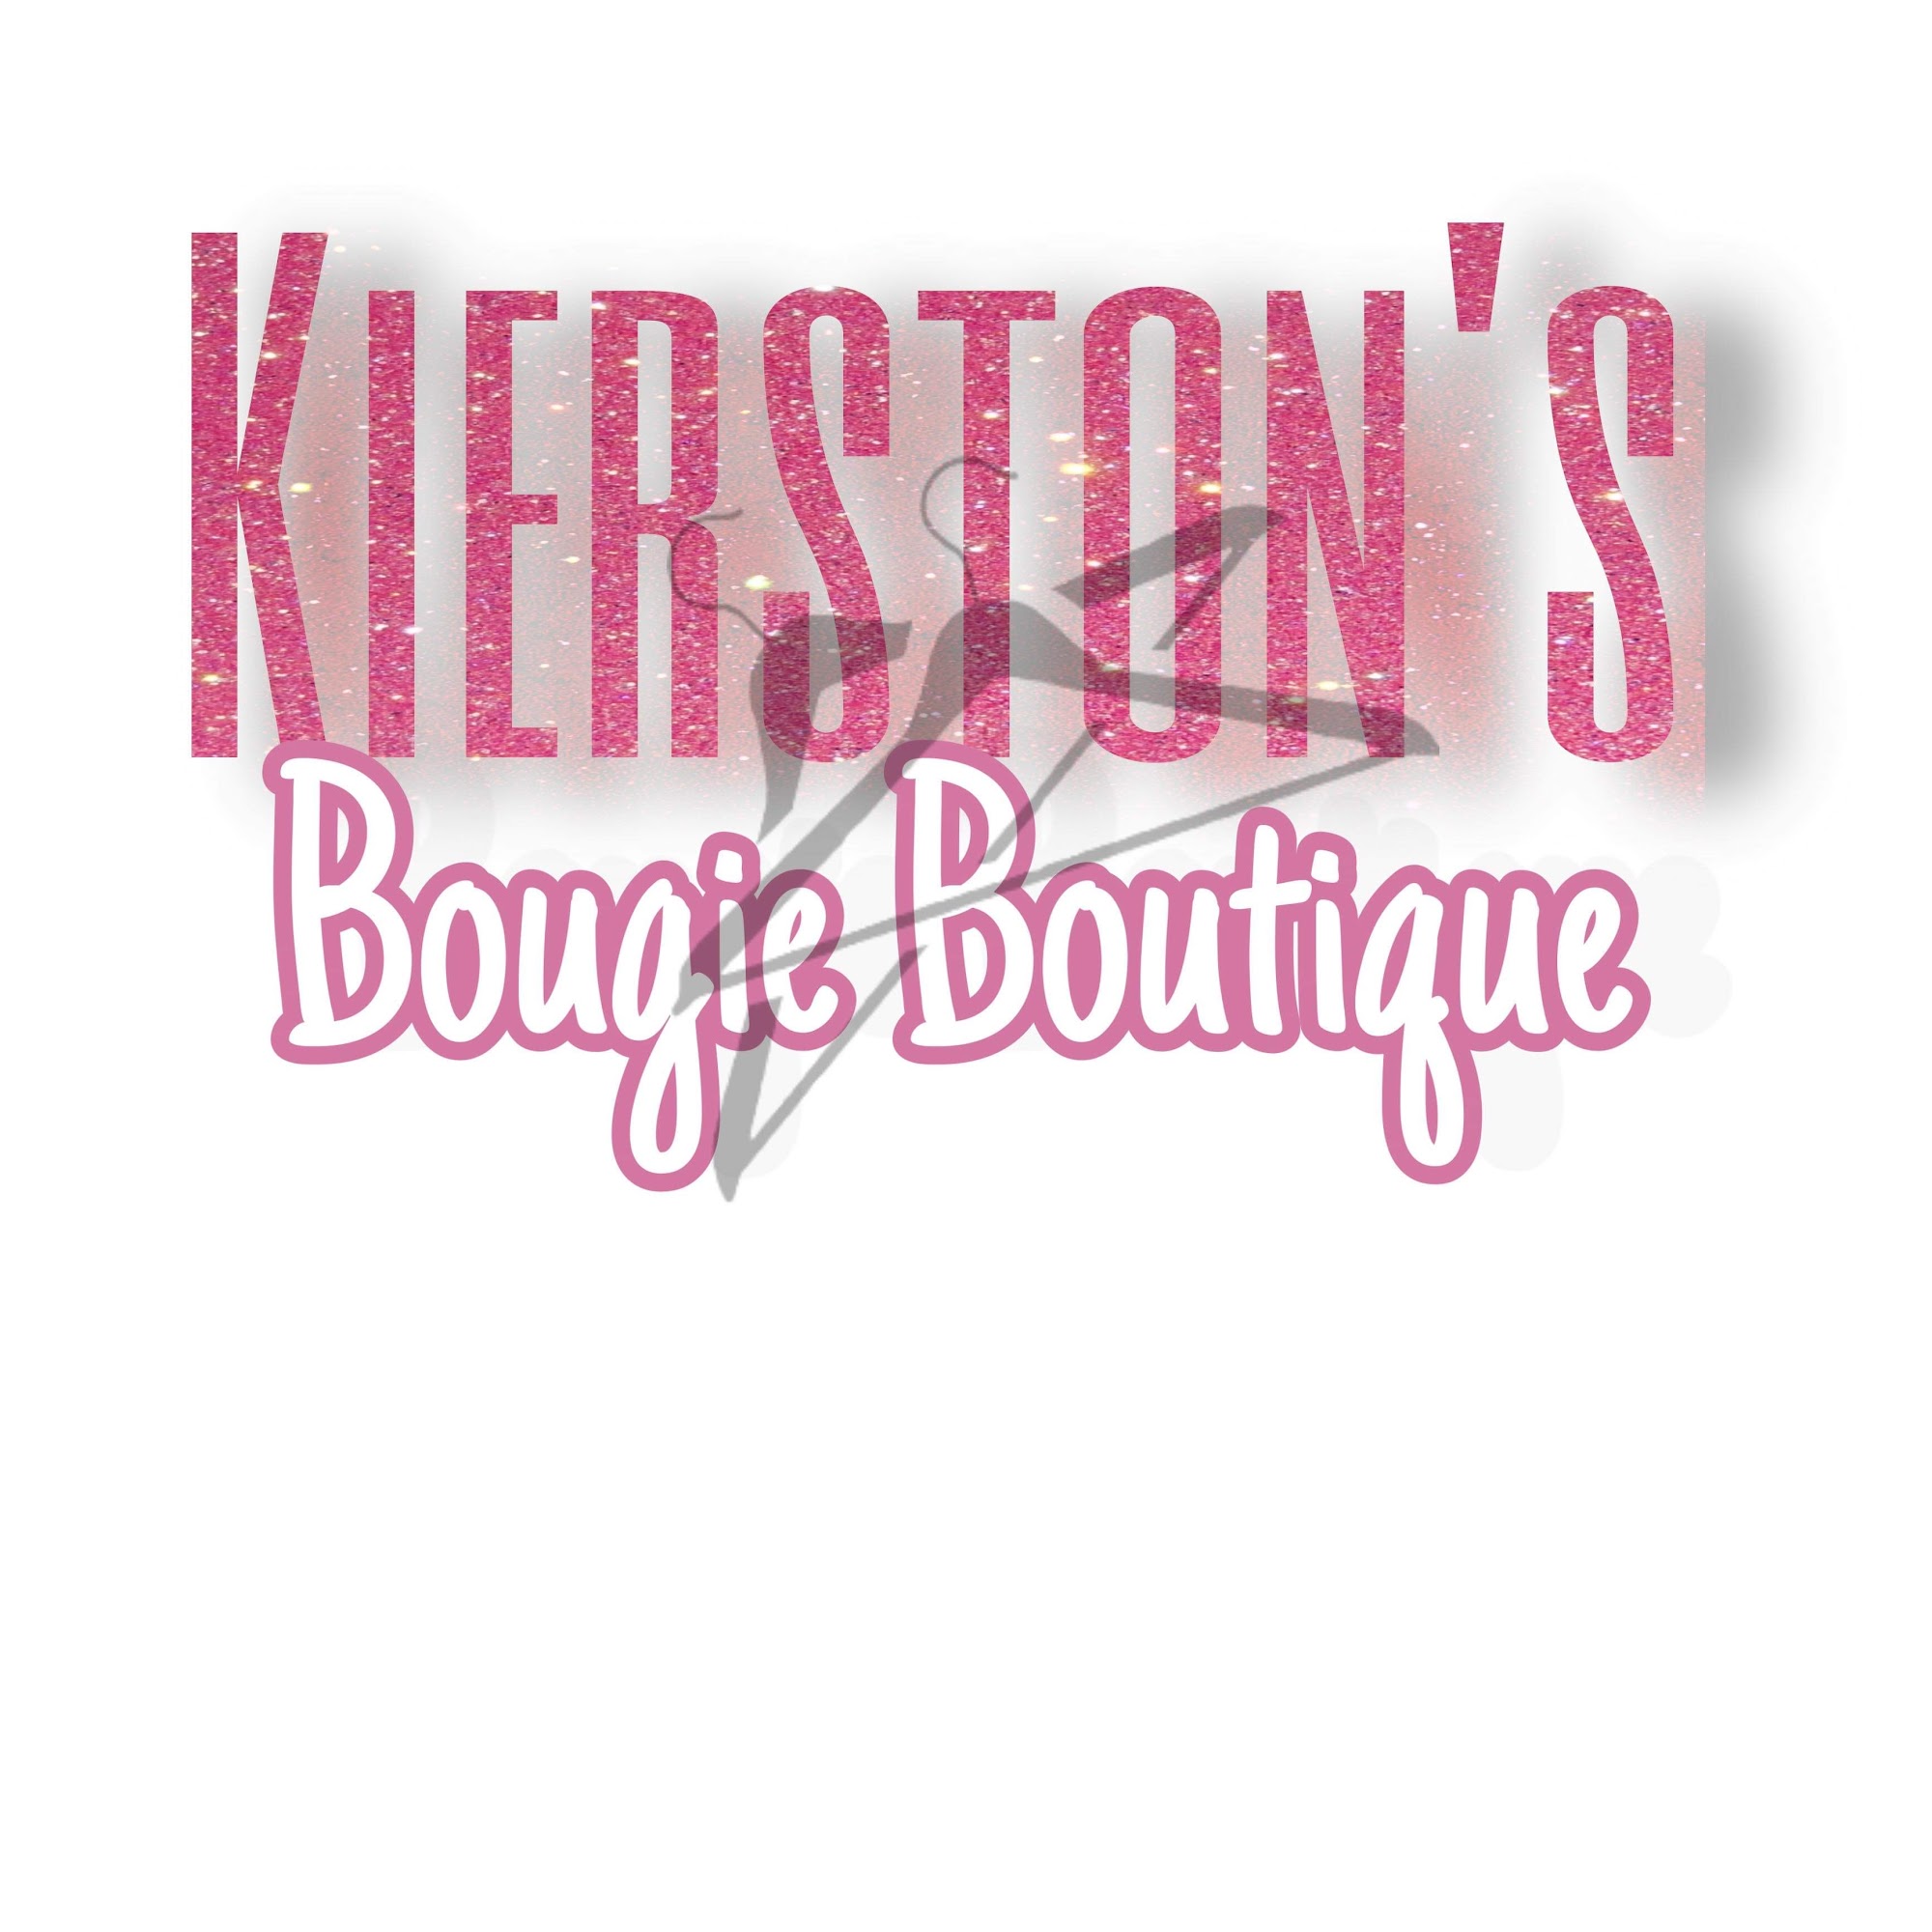 Kierston's Bougie Boutique